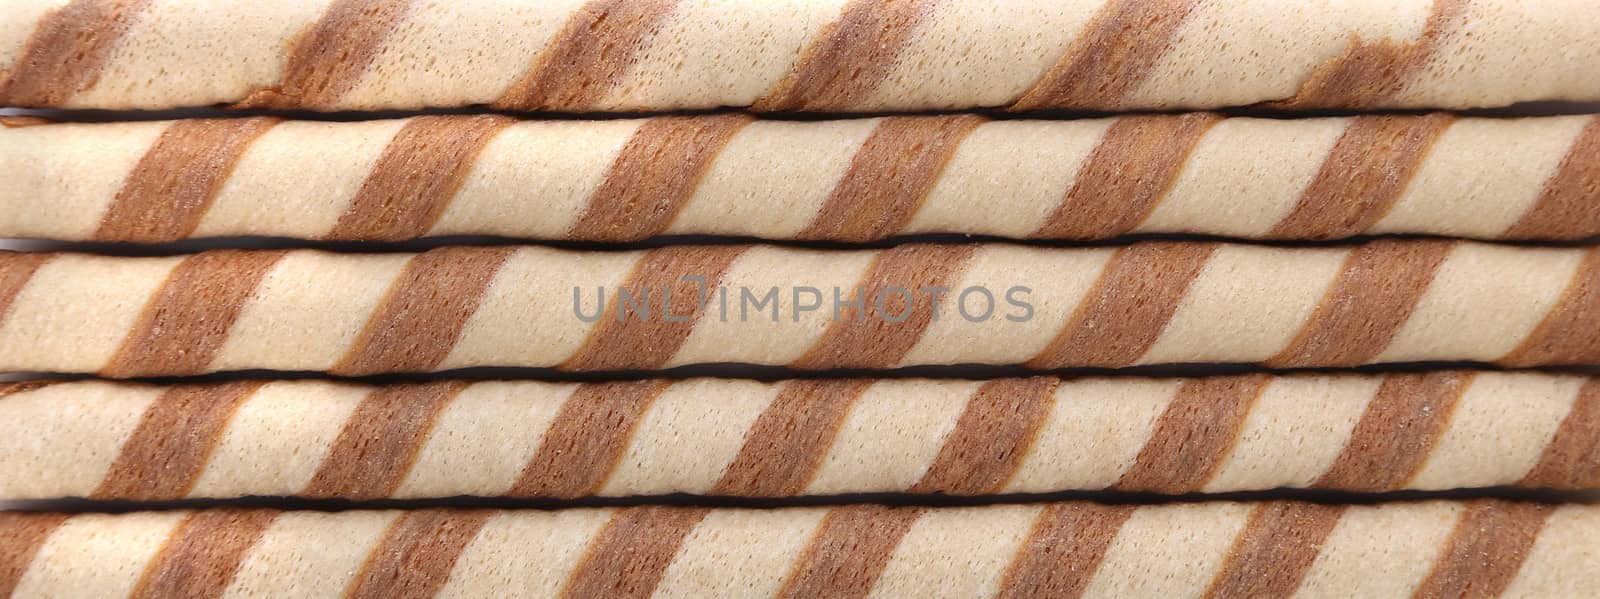 Background of waffle rolls by indigolotos